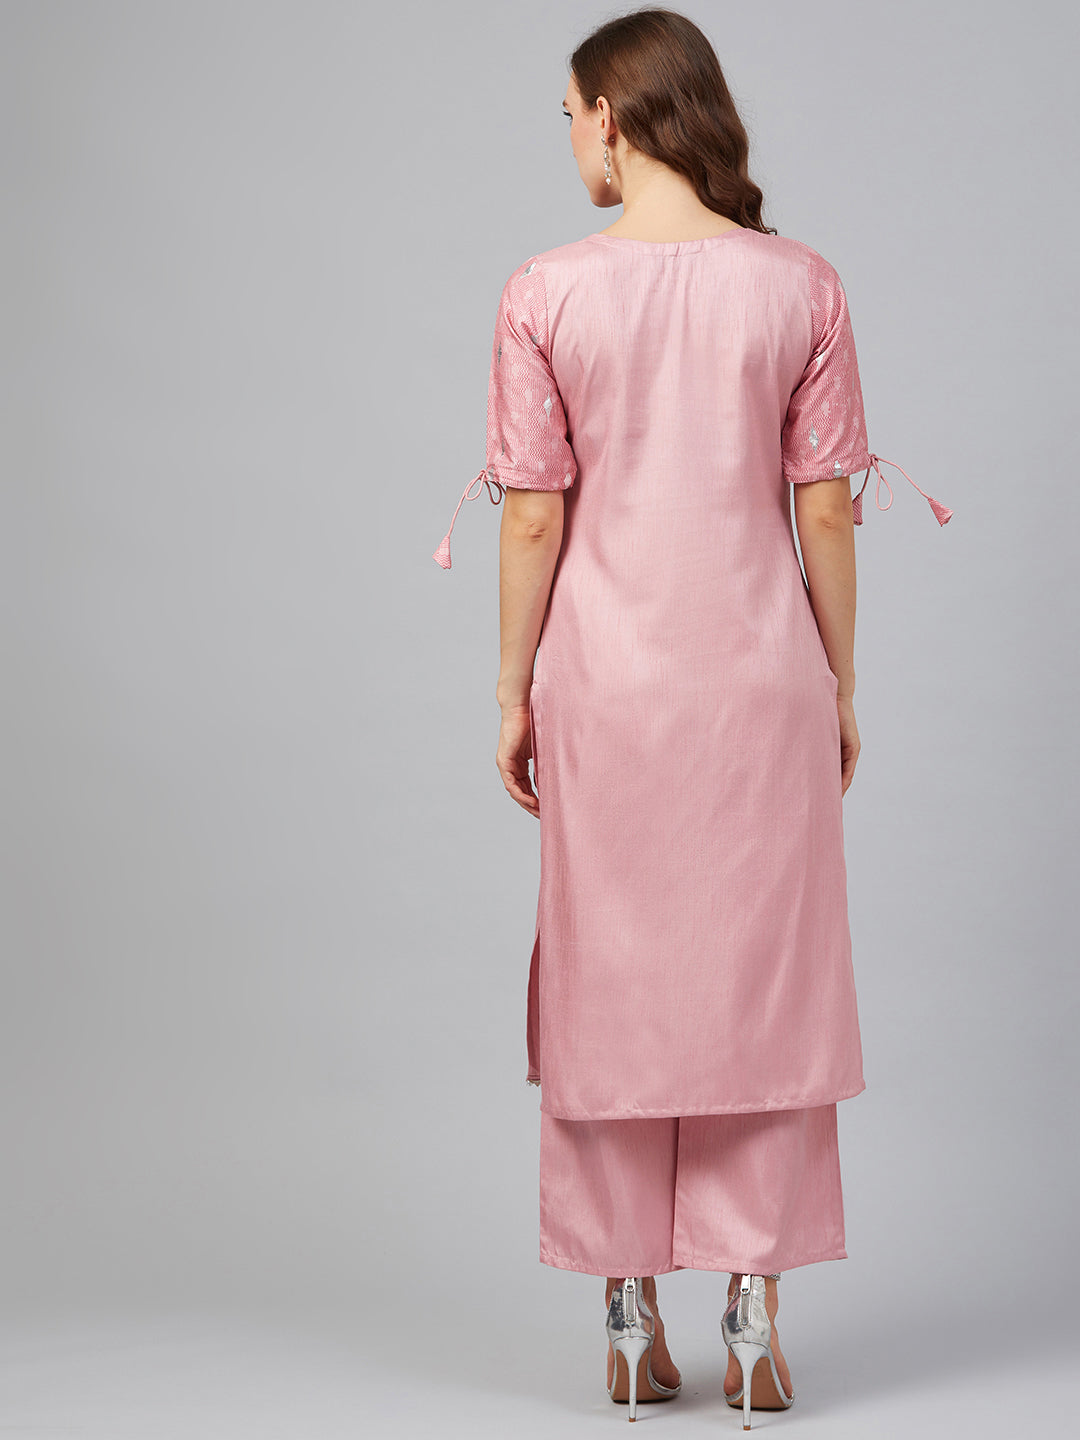 Women's Pink Poly Silk Kurta by Ziyaa